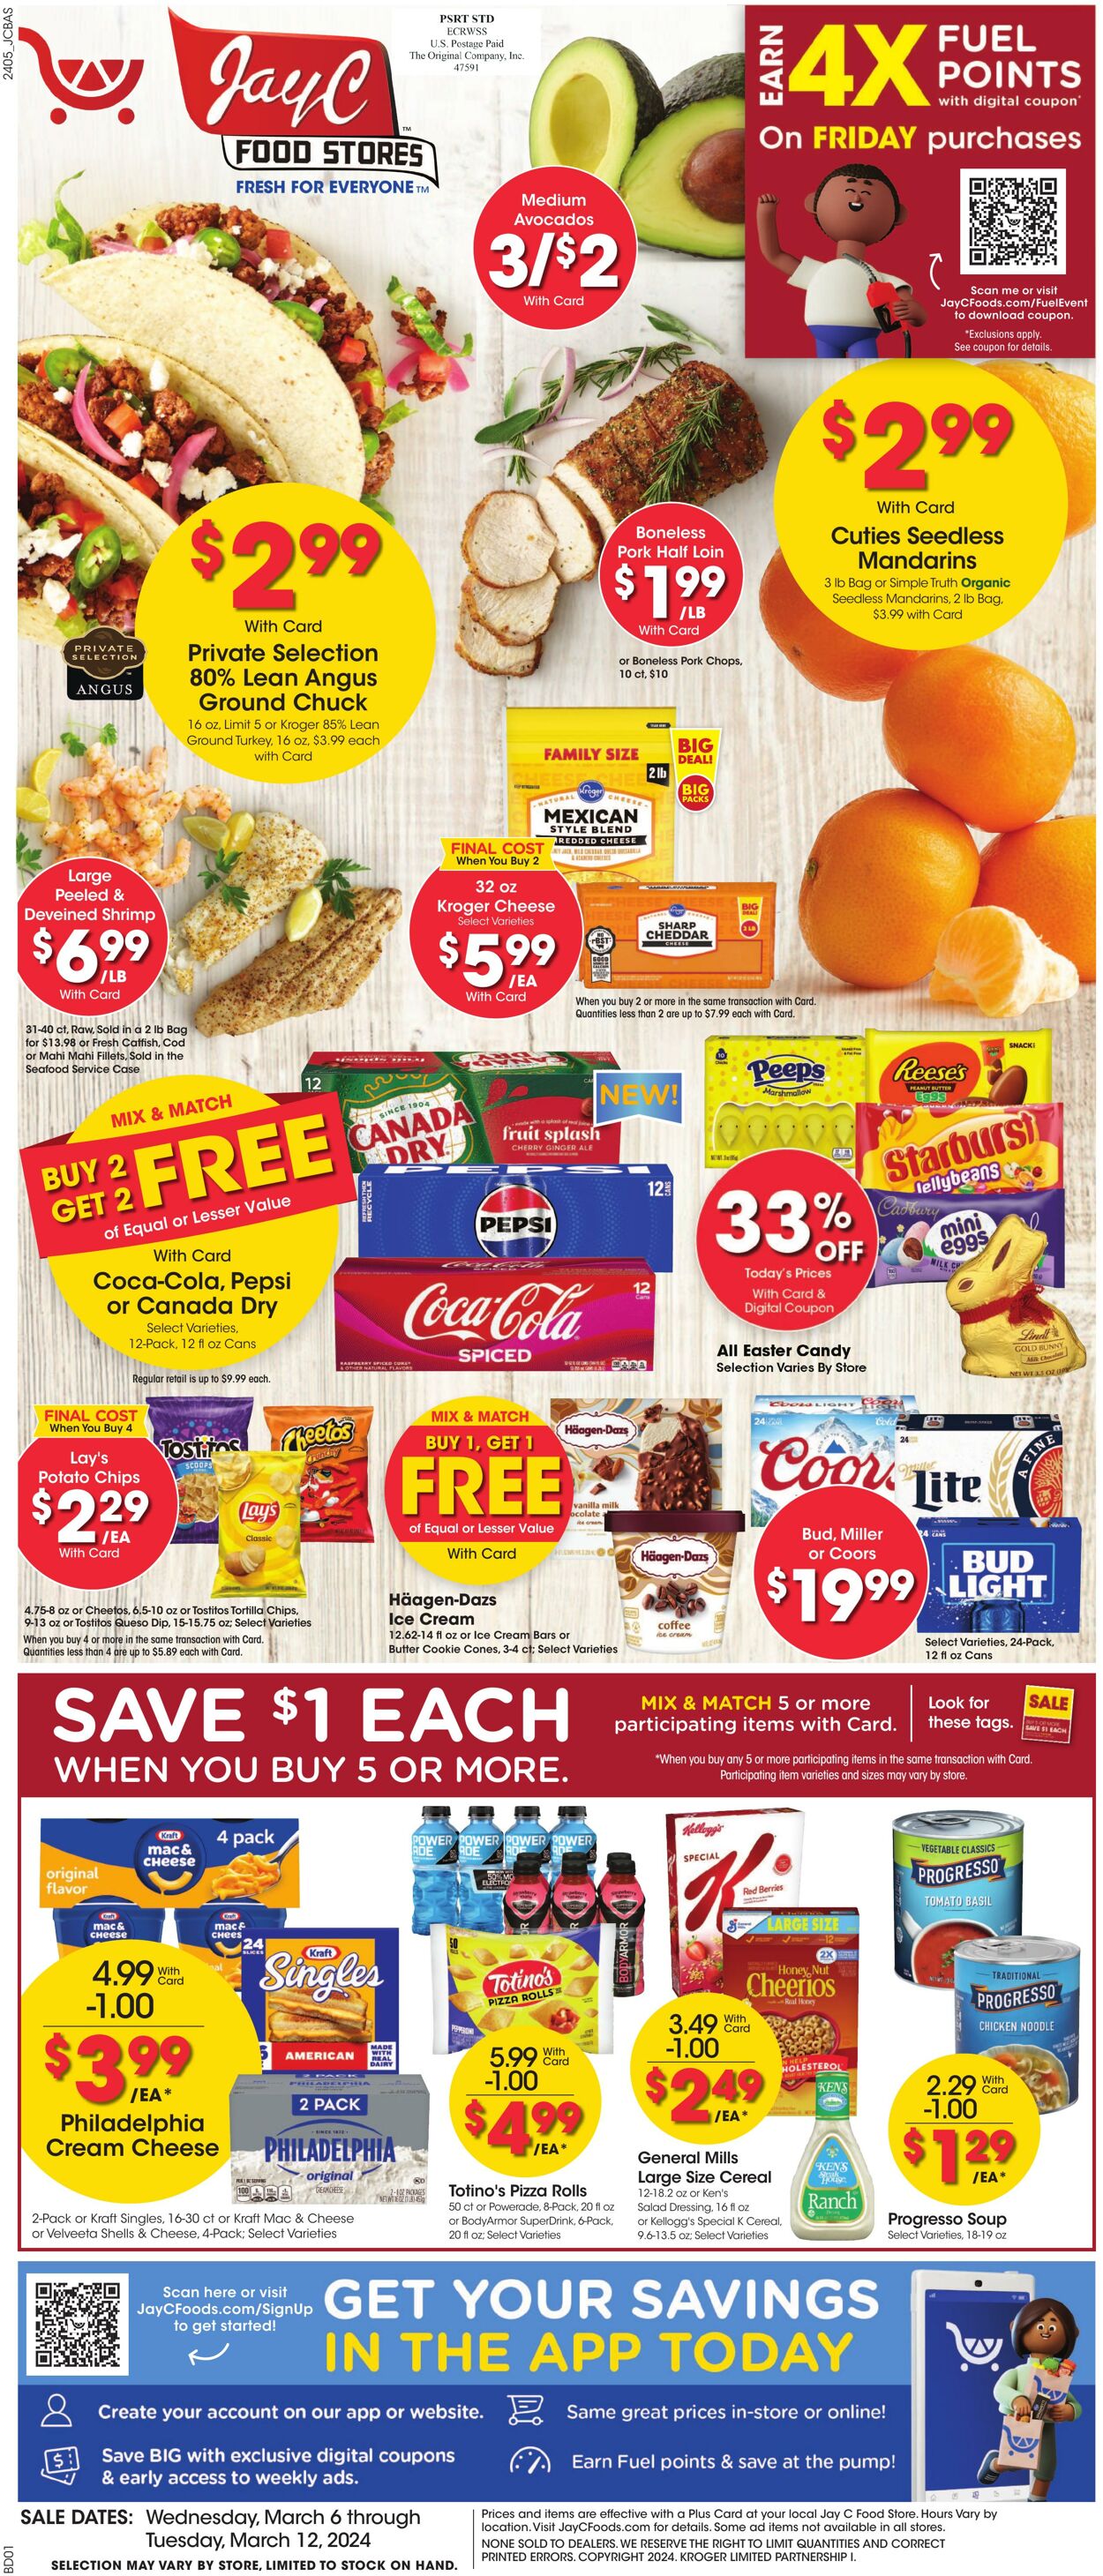 Weekly ad JayC Food Stores 03/06/2024 - 03/12/2024